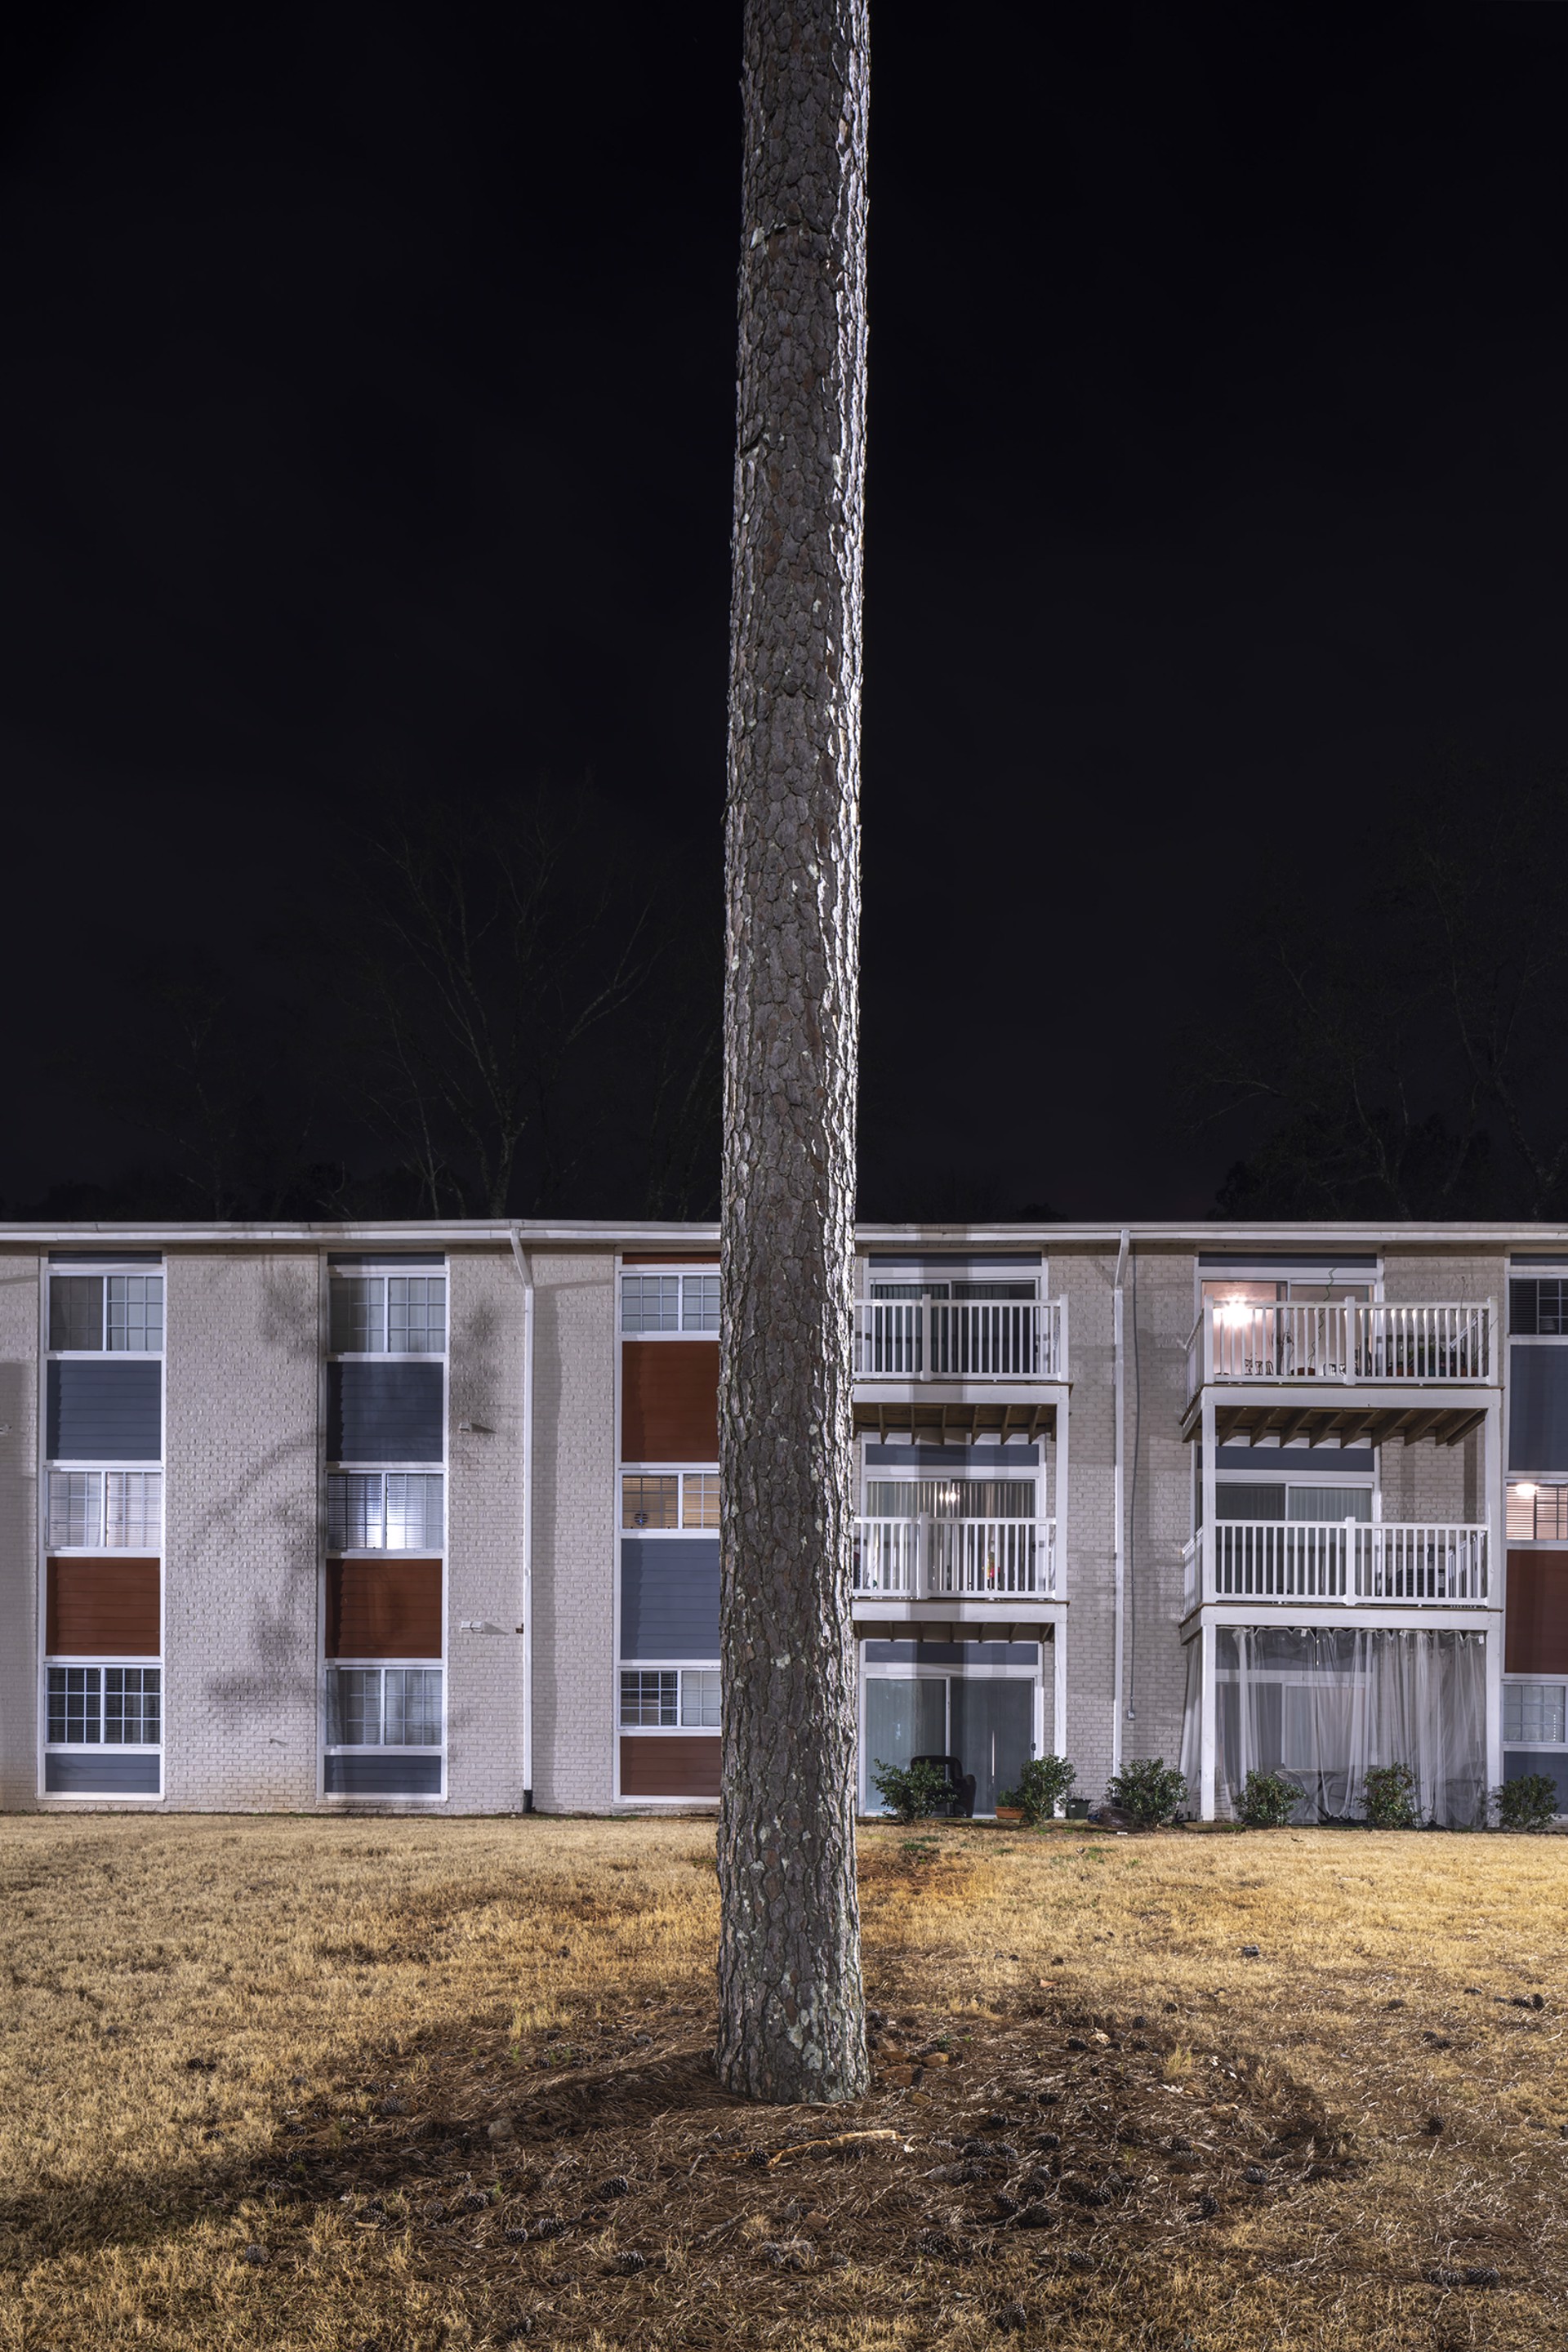 Loblolly Pine #3, Decatur, GA #2 by Peter Essick